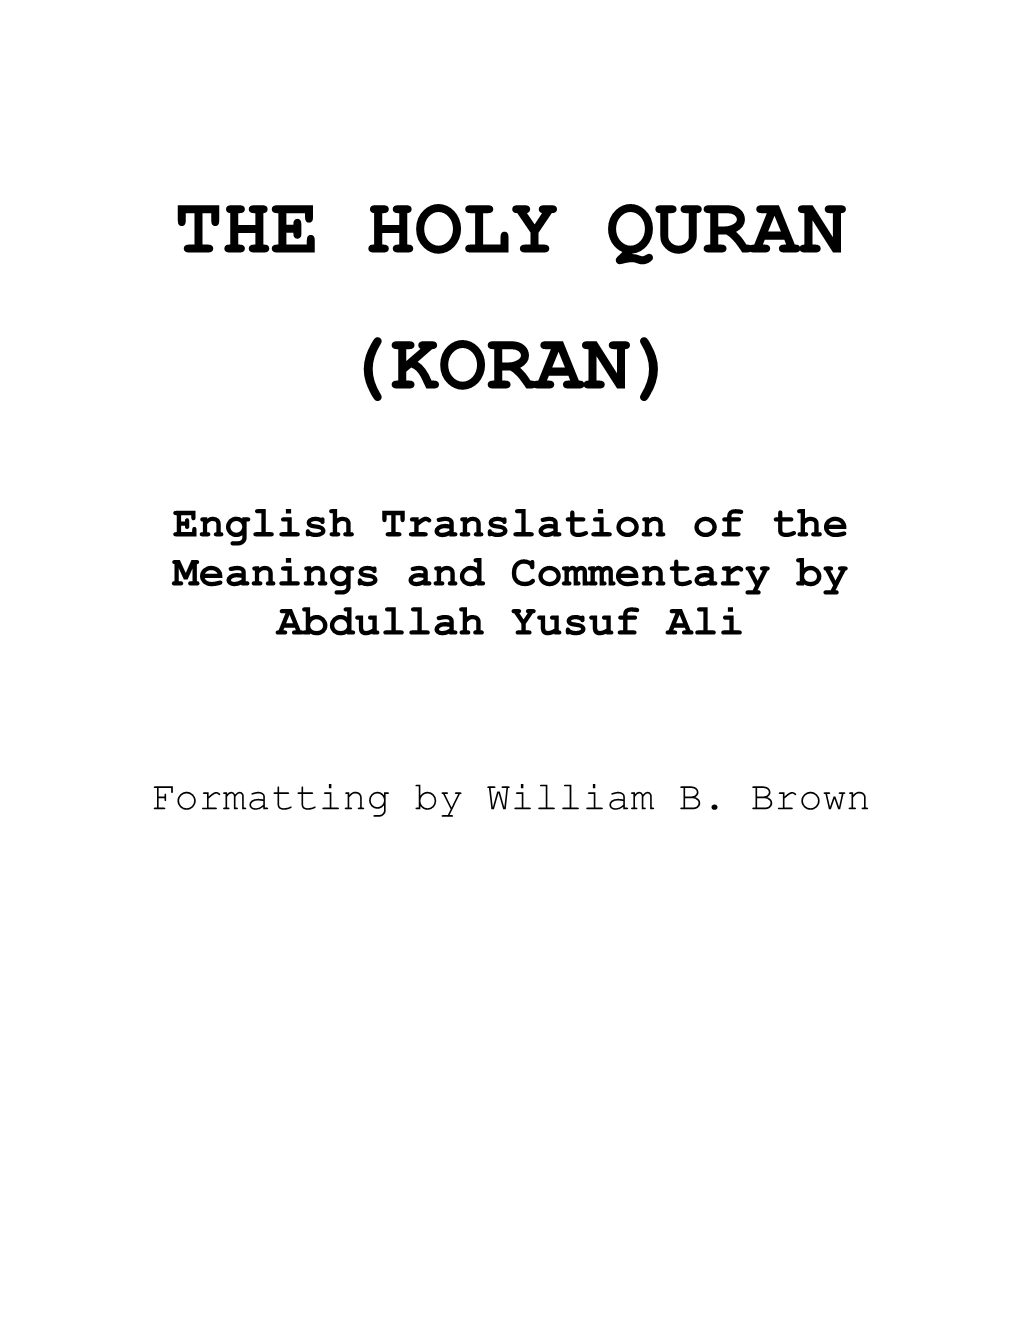 THE HOLY QURAN (KORAN) English Translation of The